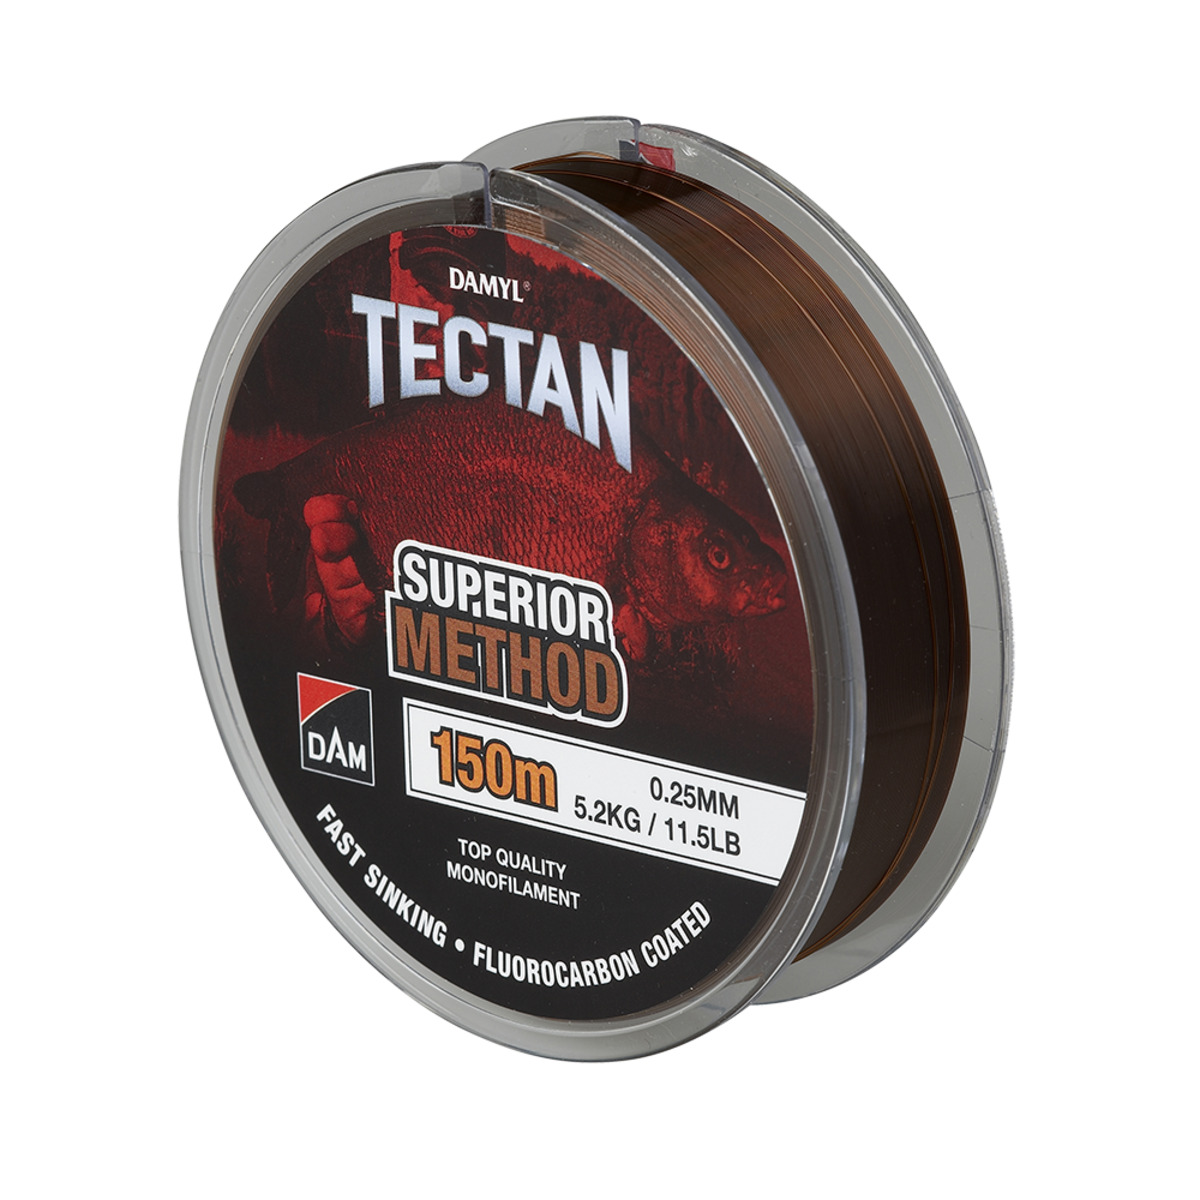 Dam Tectan Superior Fcc Method 150m - 0.25MM 5.2KG 11.5LBS BROWN